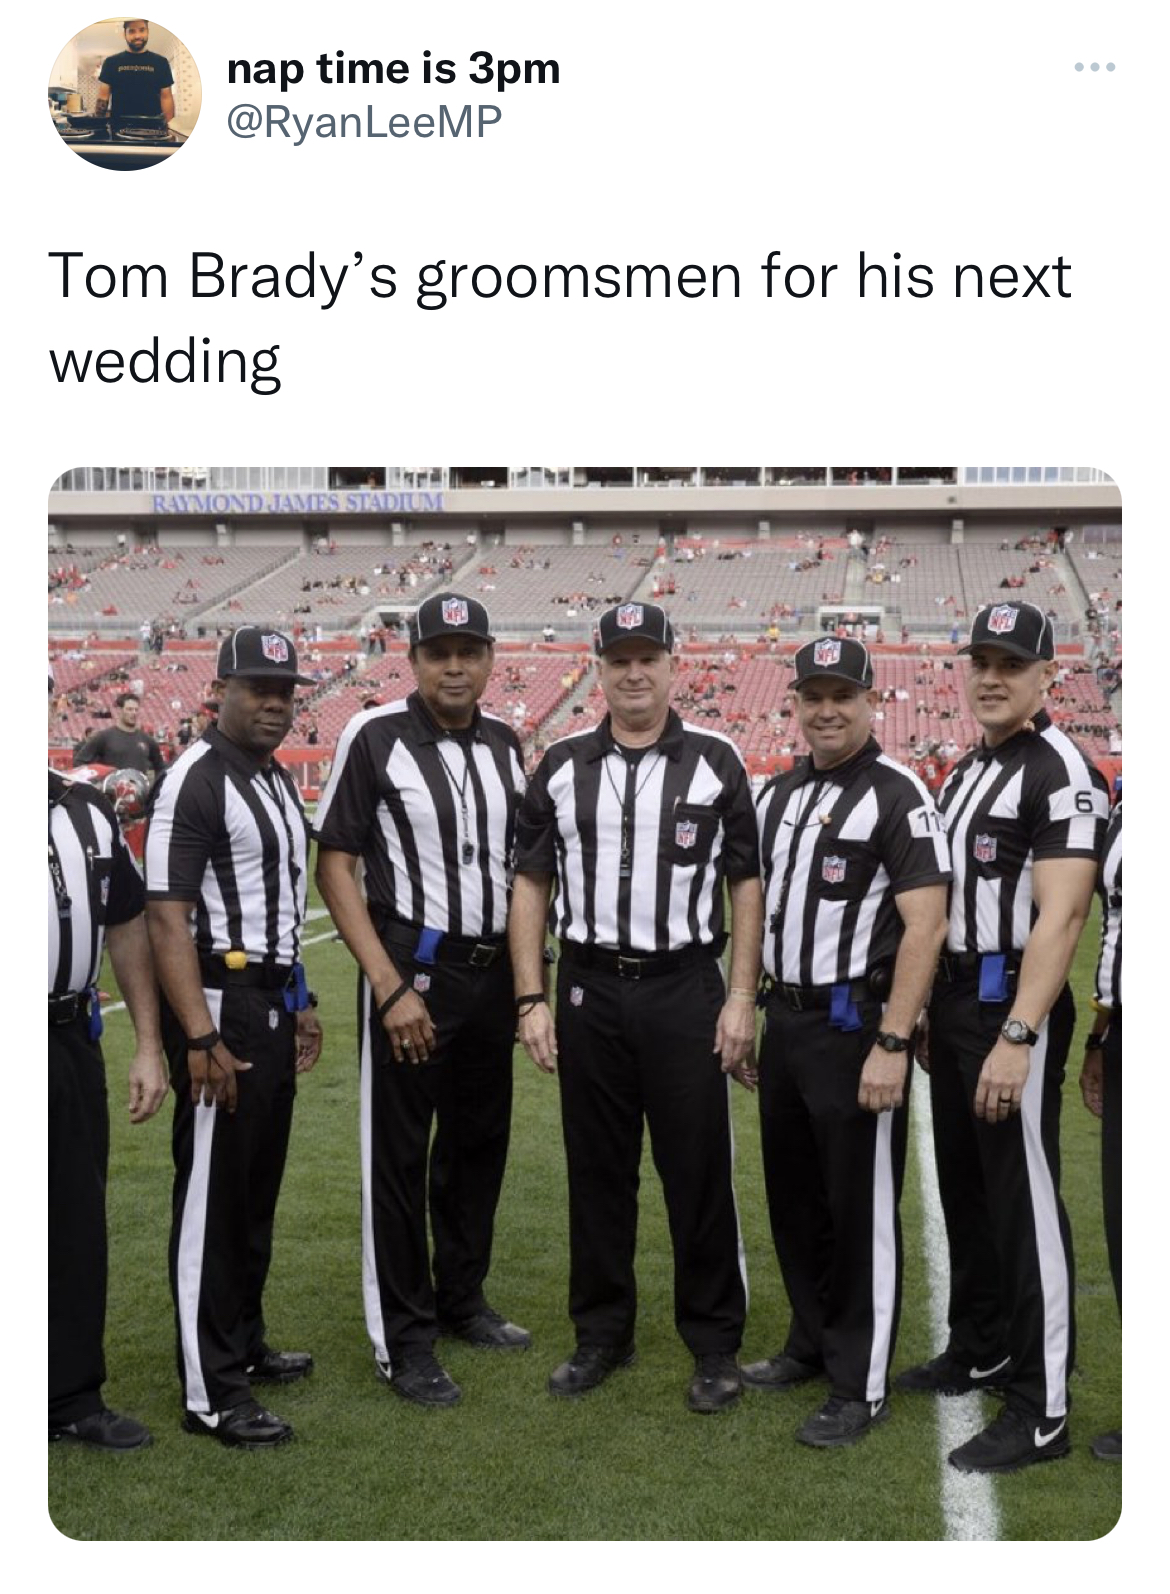 Tweets roasting celebs - chiefs refs meme - nap time is 3pm Tom Brady's groomsmen for his next wedding 41112 Wirg